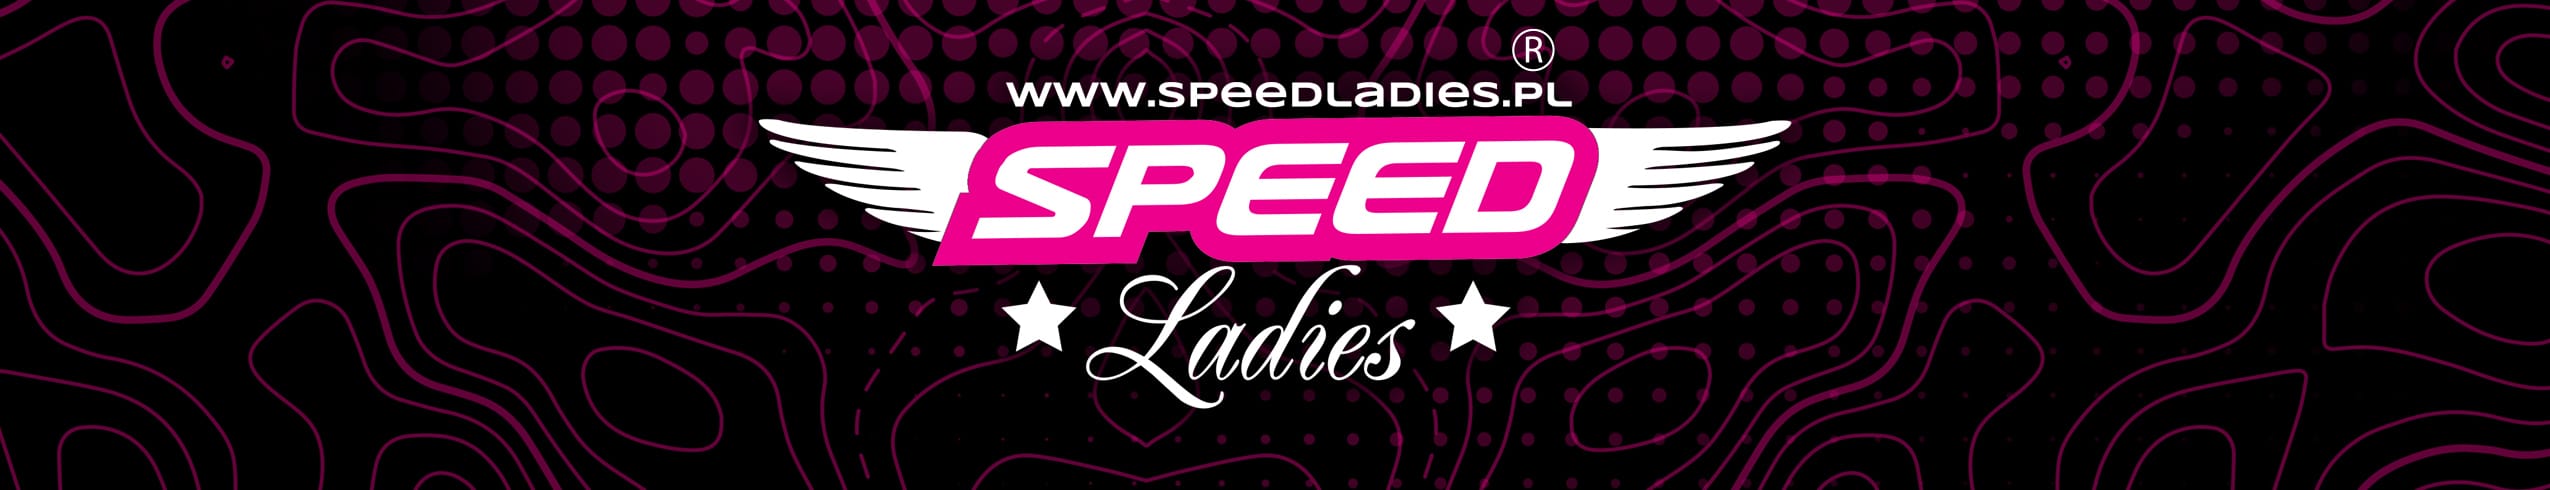 speed ladies oficjalny sklep